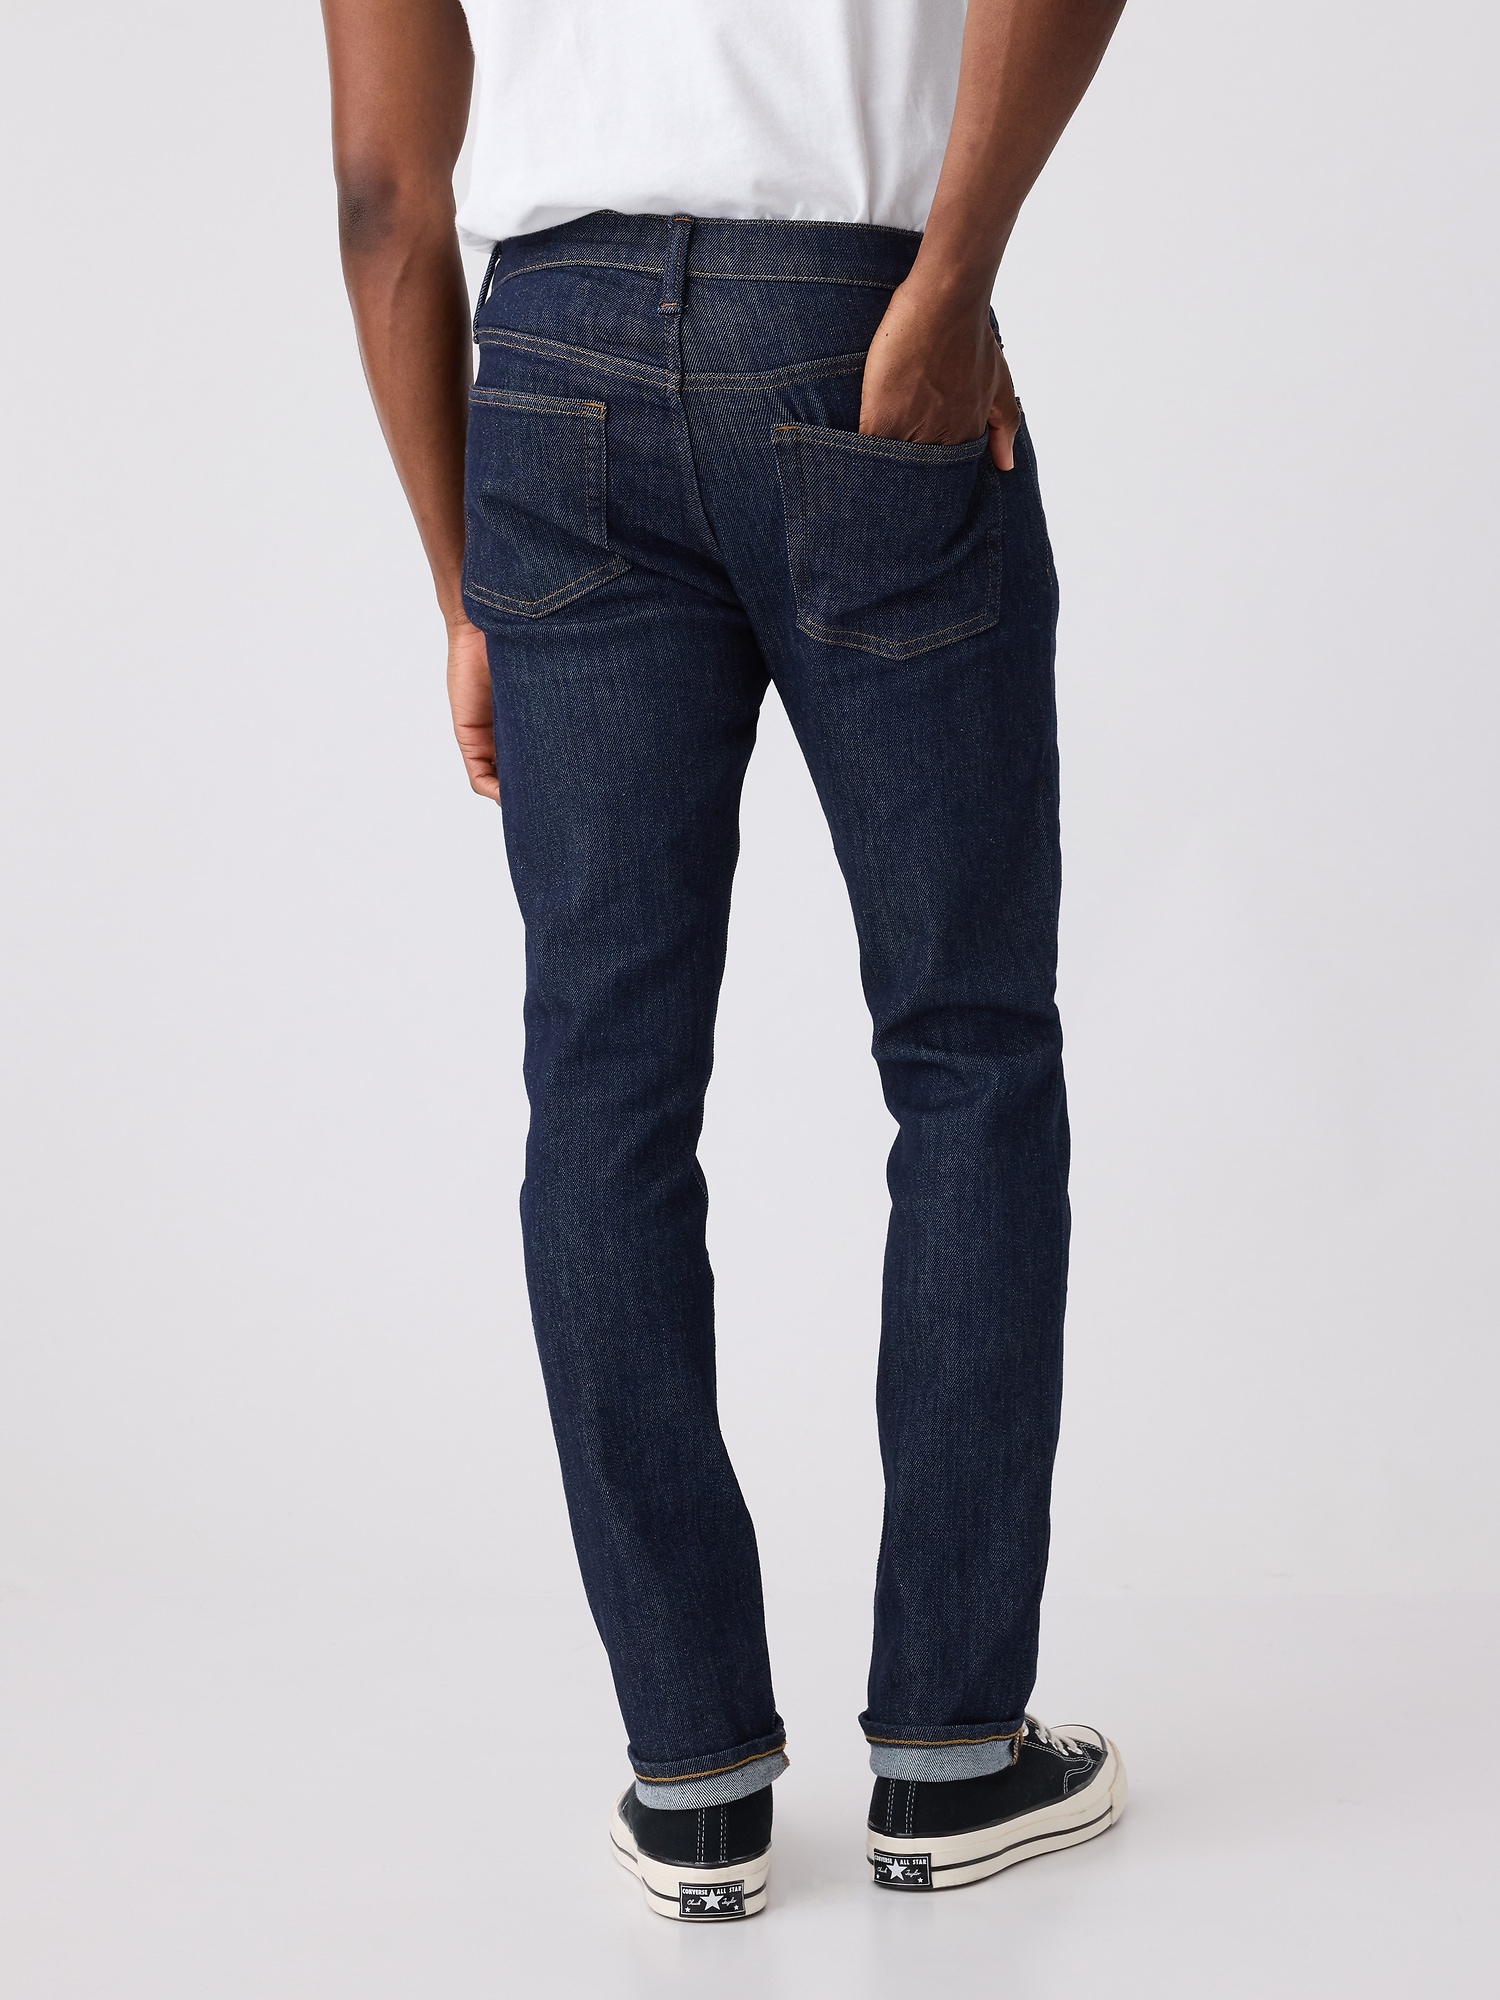 MEN'S GAP SKINNY Fit GapFlex Stretch Soft Wear Denim Jeans Dark Wash Rinse  *1B $18.52 - PicClick